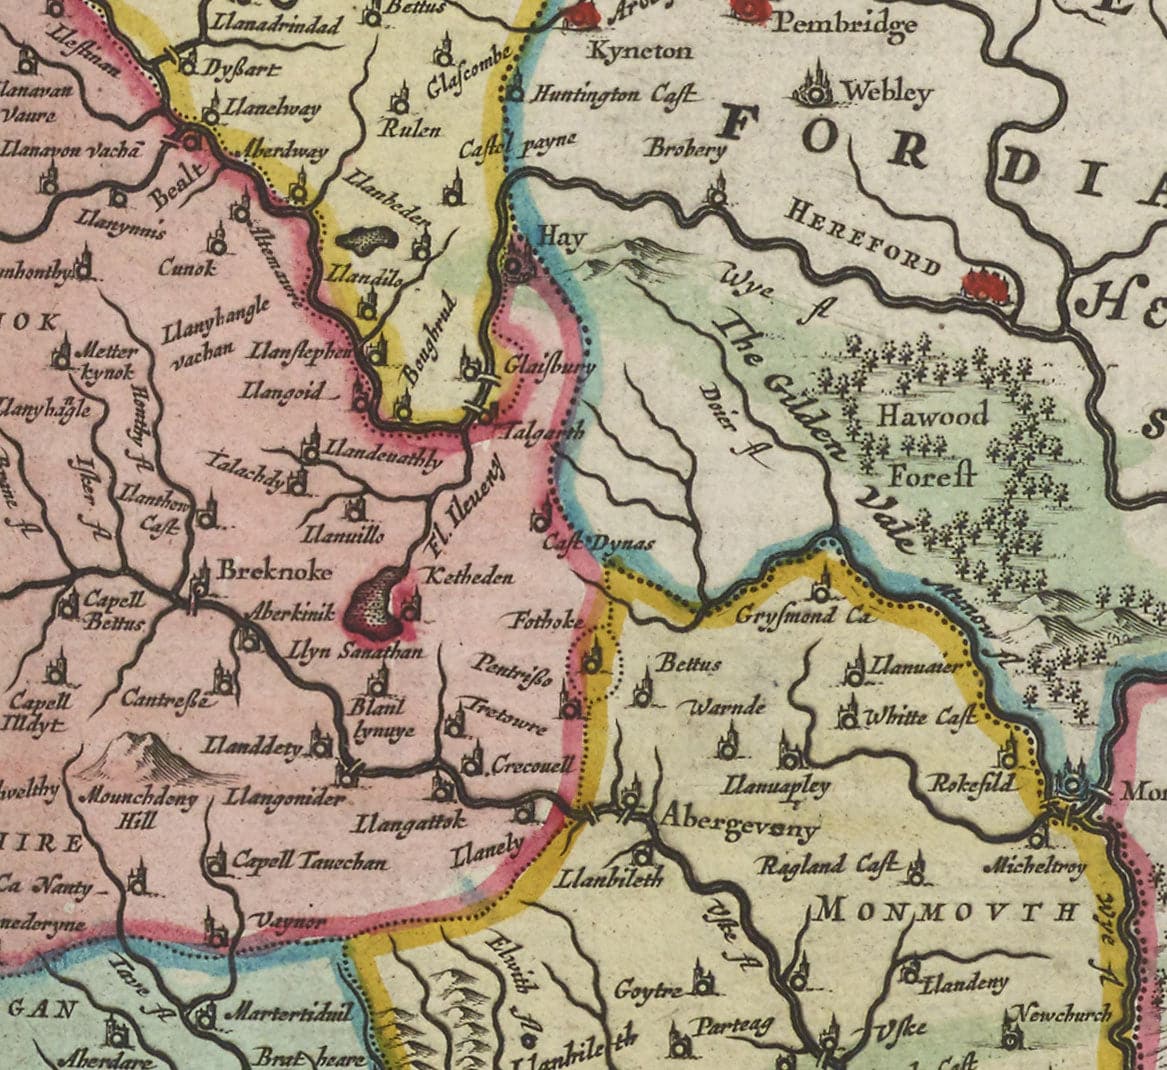 Rare Old Map of Wales by Jean Blaeu, 1645 - from the Theatrum Orbis Terrarum Sive Atlas Novus